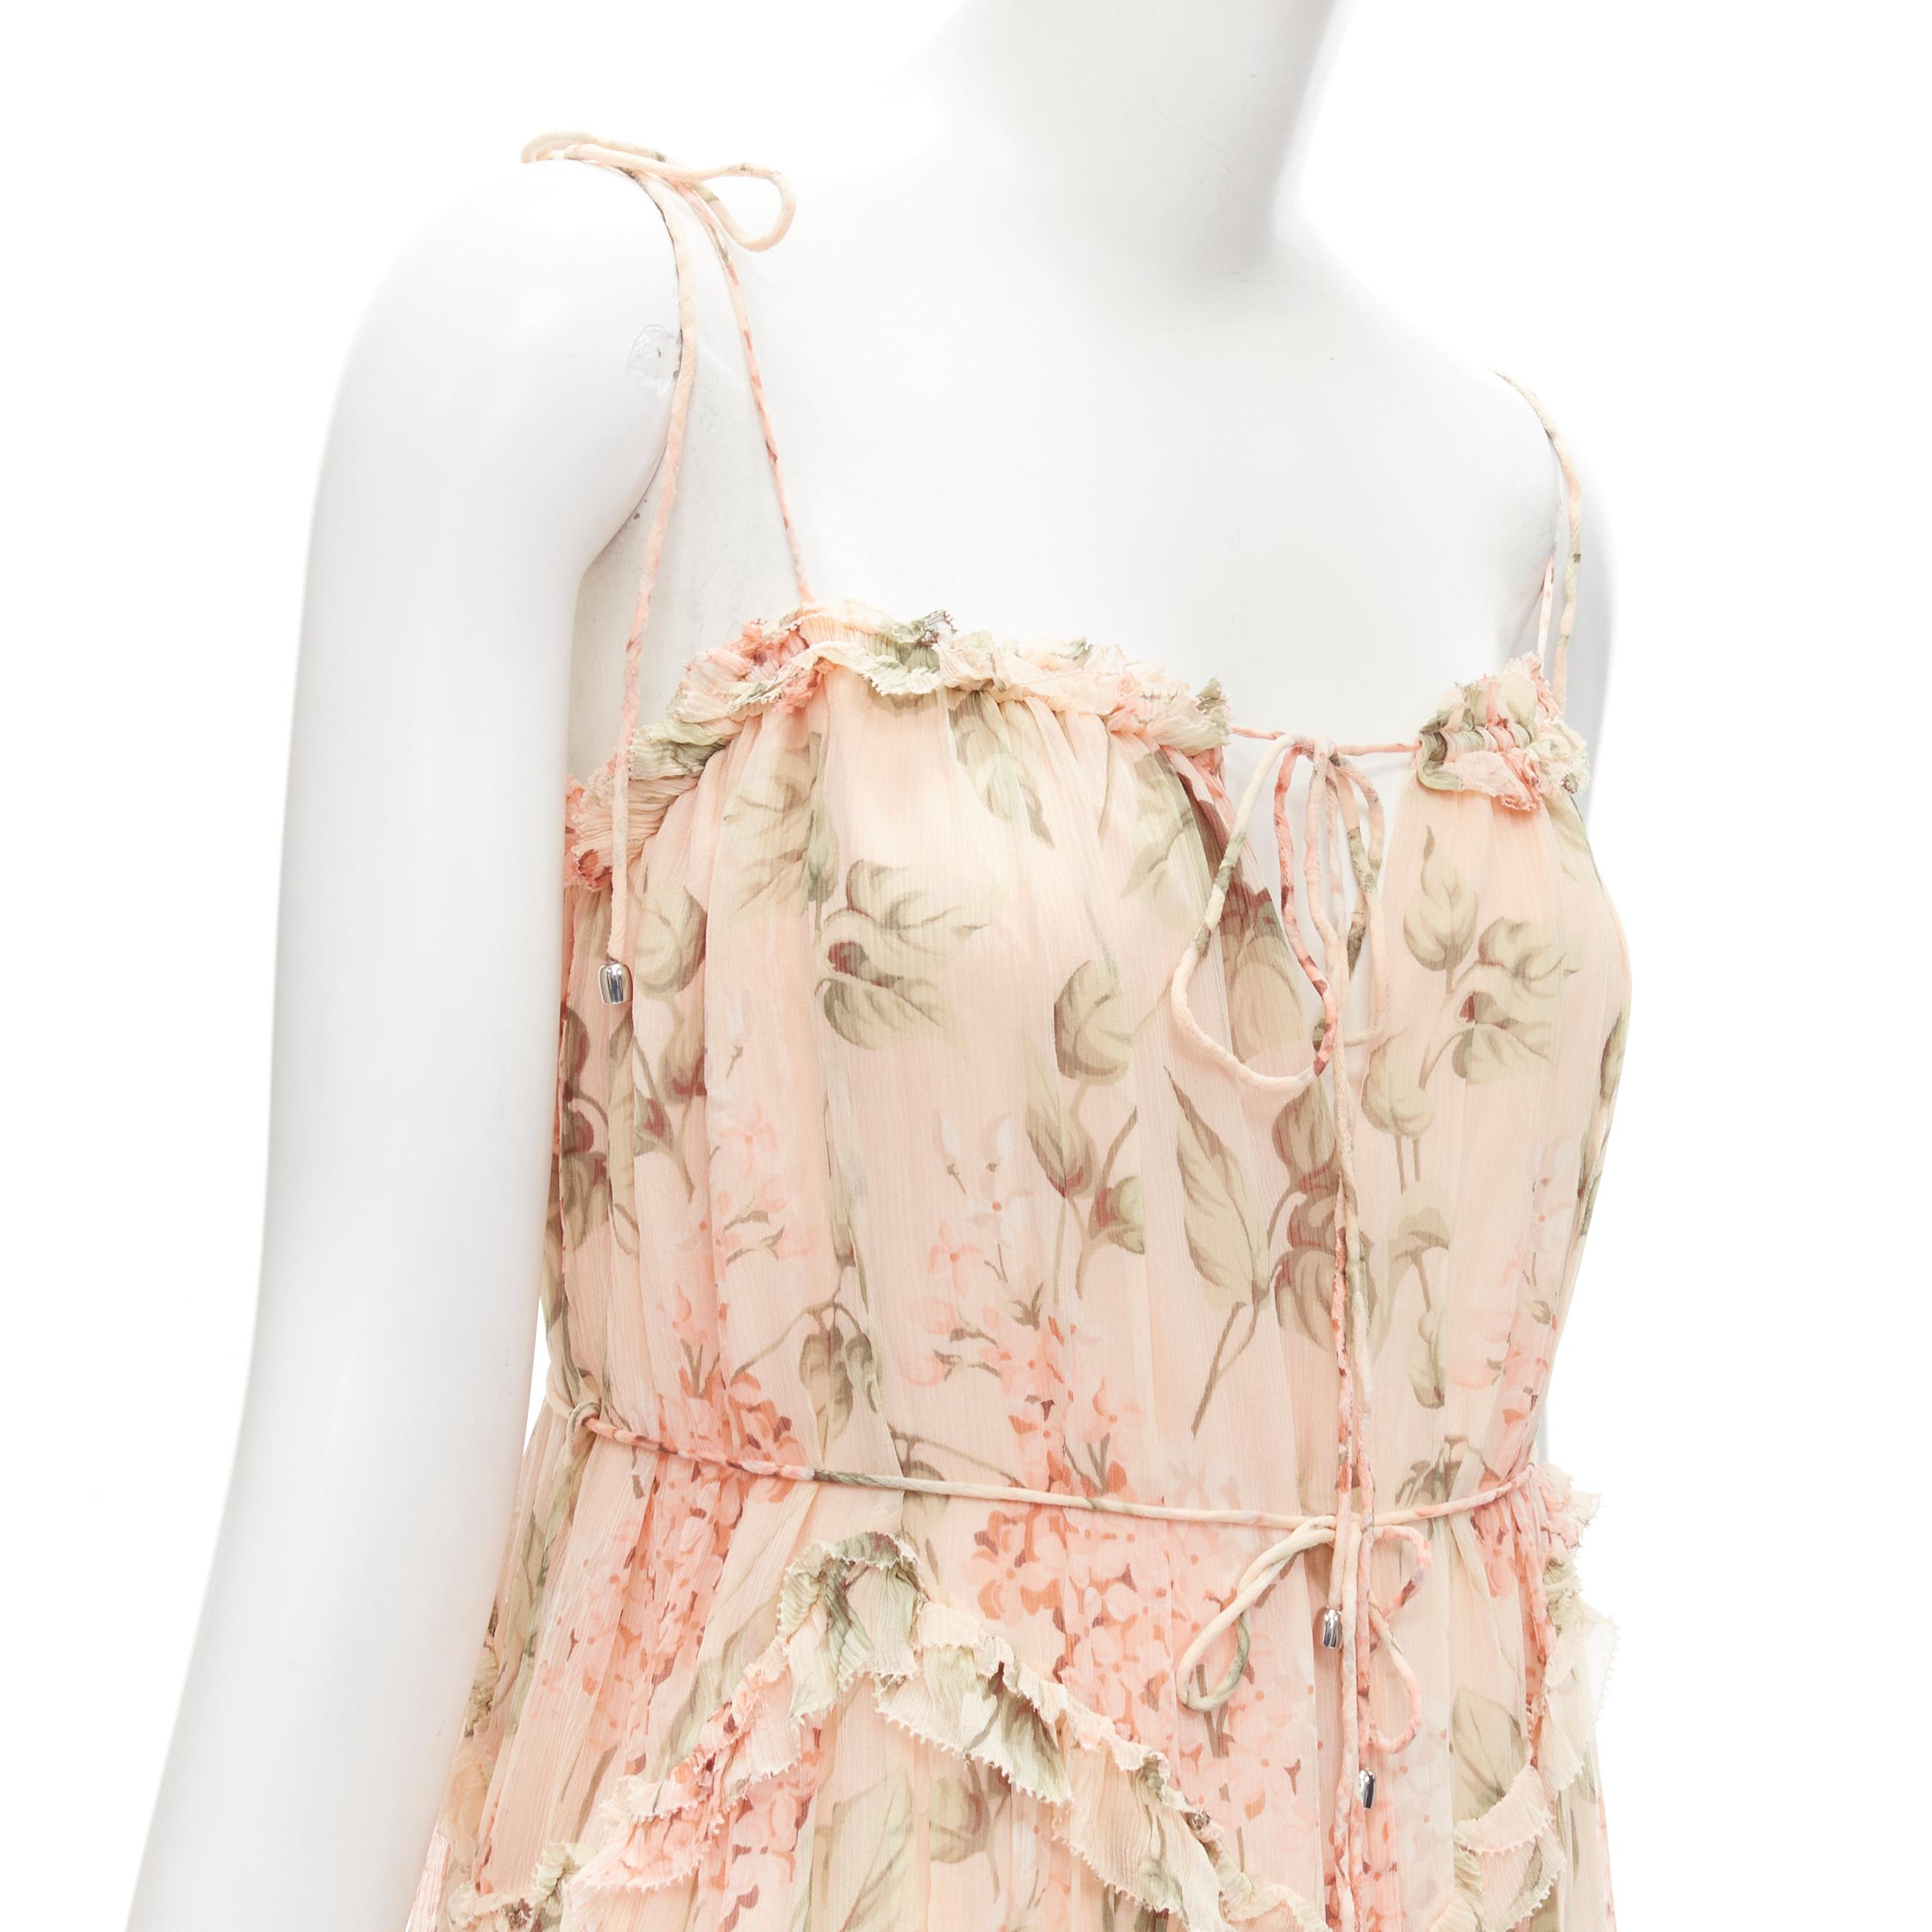 ZIMMERMANN 100% silk blush pink floral print ruffle trim summer dress Sz.1 S
Brand: Zimmermann
Extra Detail: Tie spaghetti straps. Ruffle tiered trim. Tie keyhole neckline. Tie string-belt.

CONDITION:
Condition: Excellent, this item was pre-owned